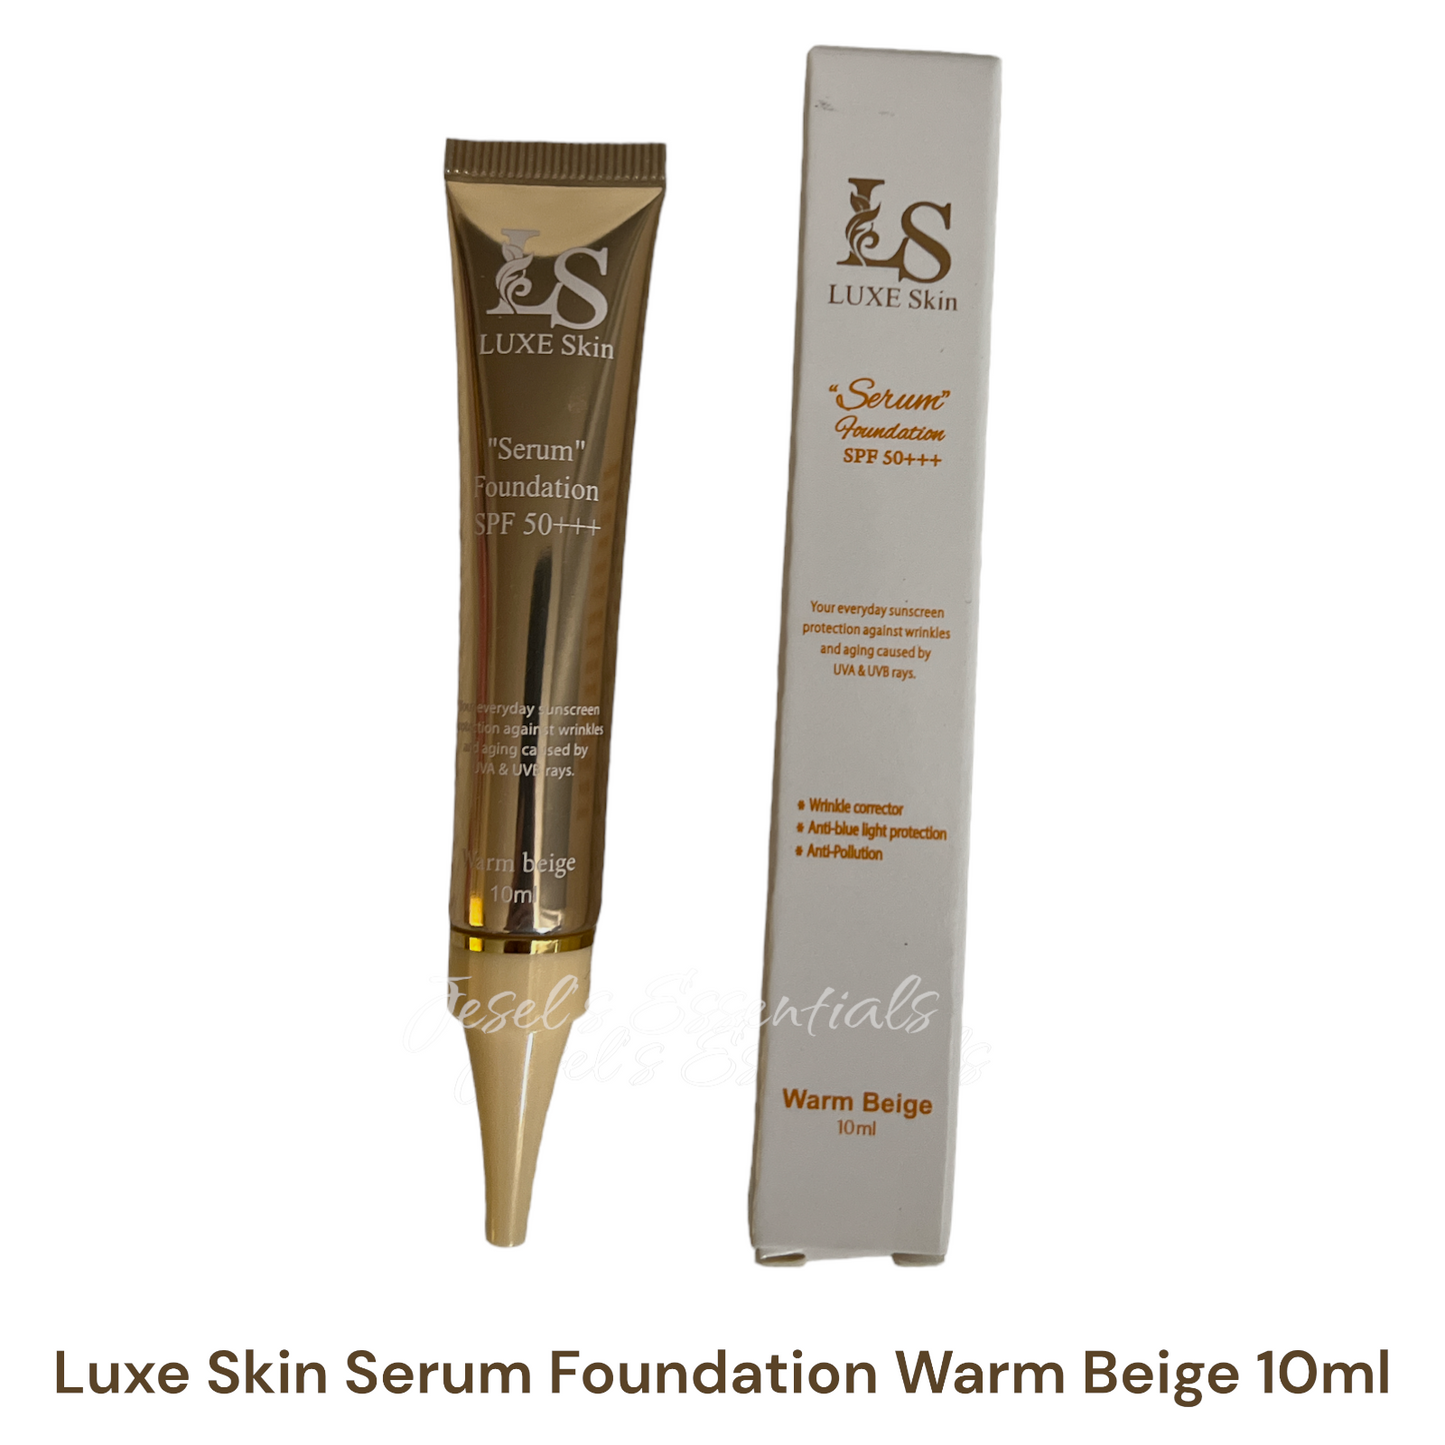 Luxe Skin Serum Foundation 10g Travel Size